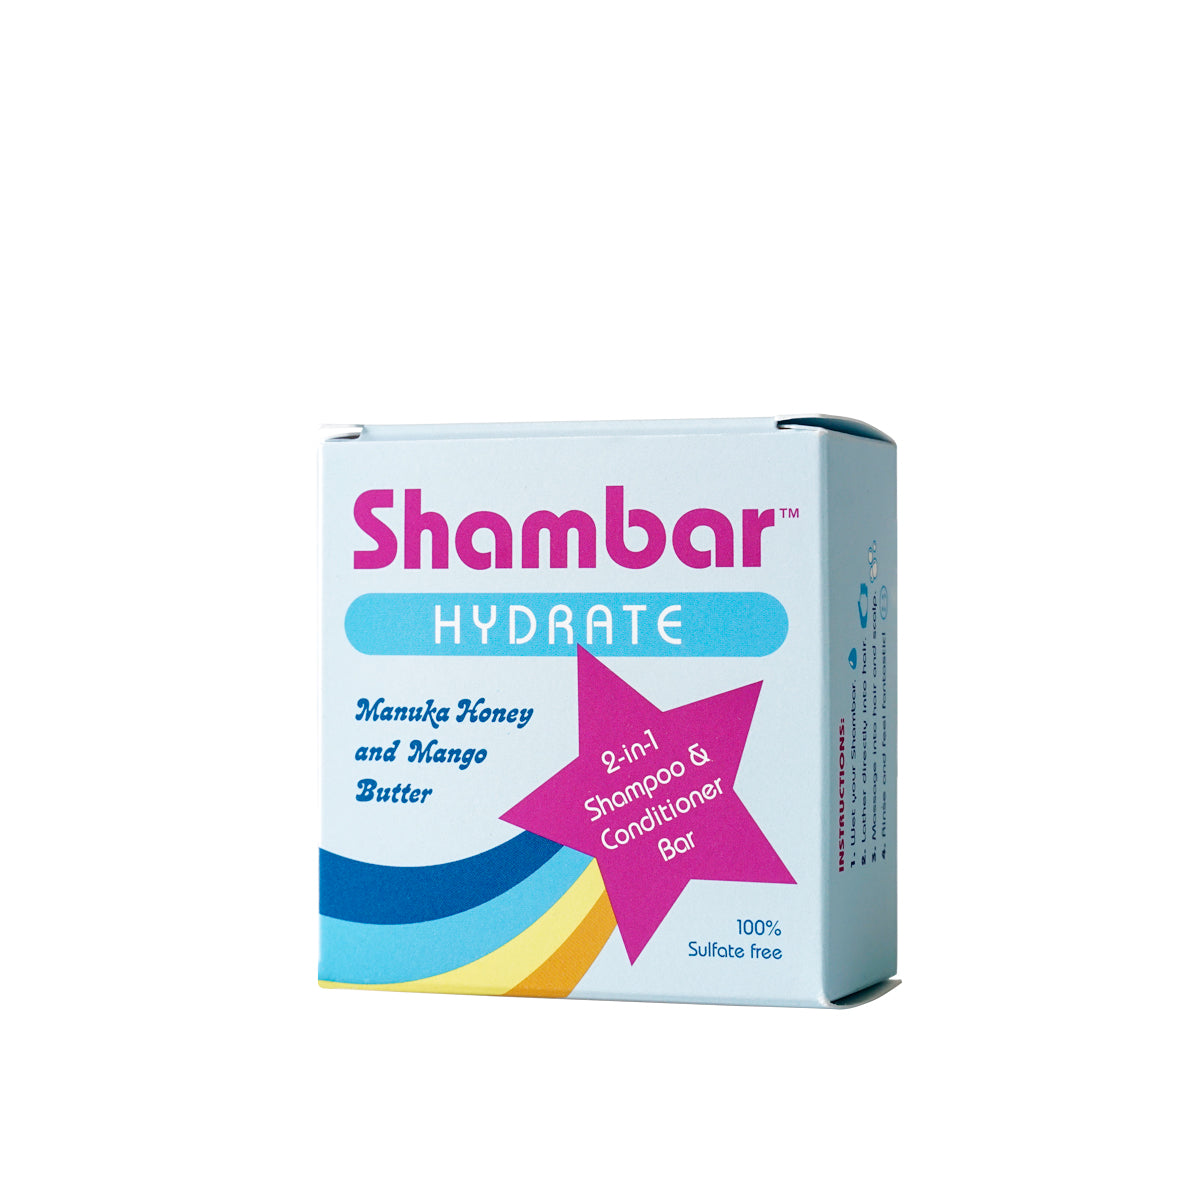 Alternate image of Shampoo Bar Hydrate